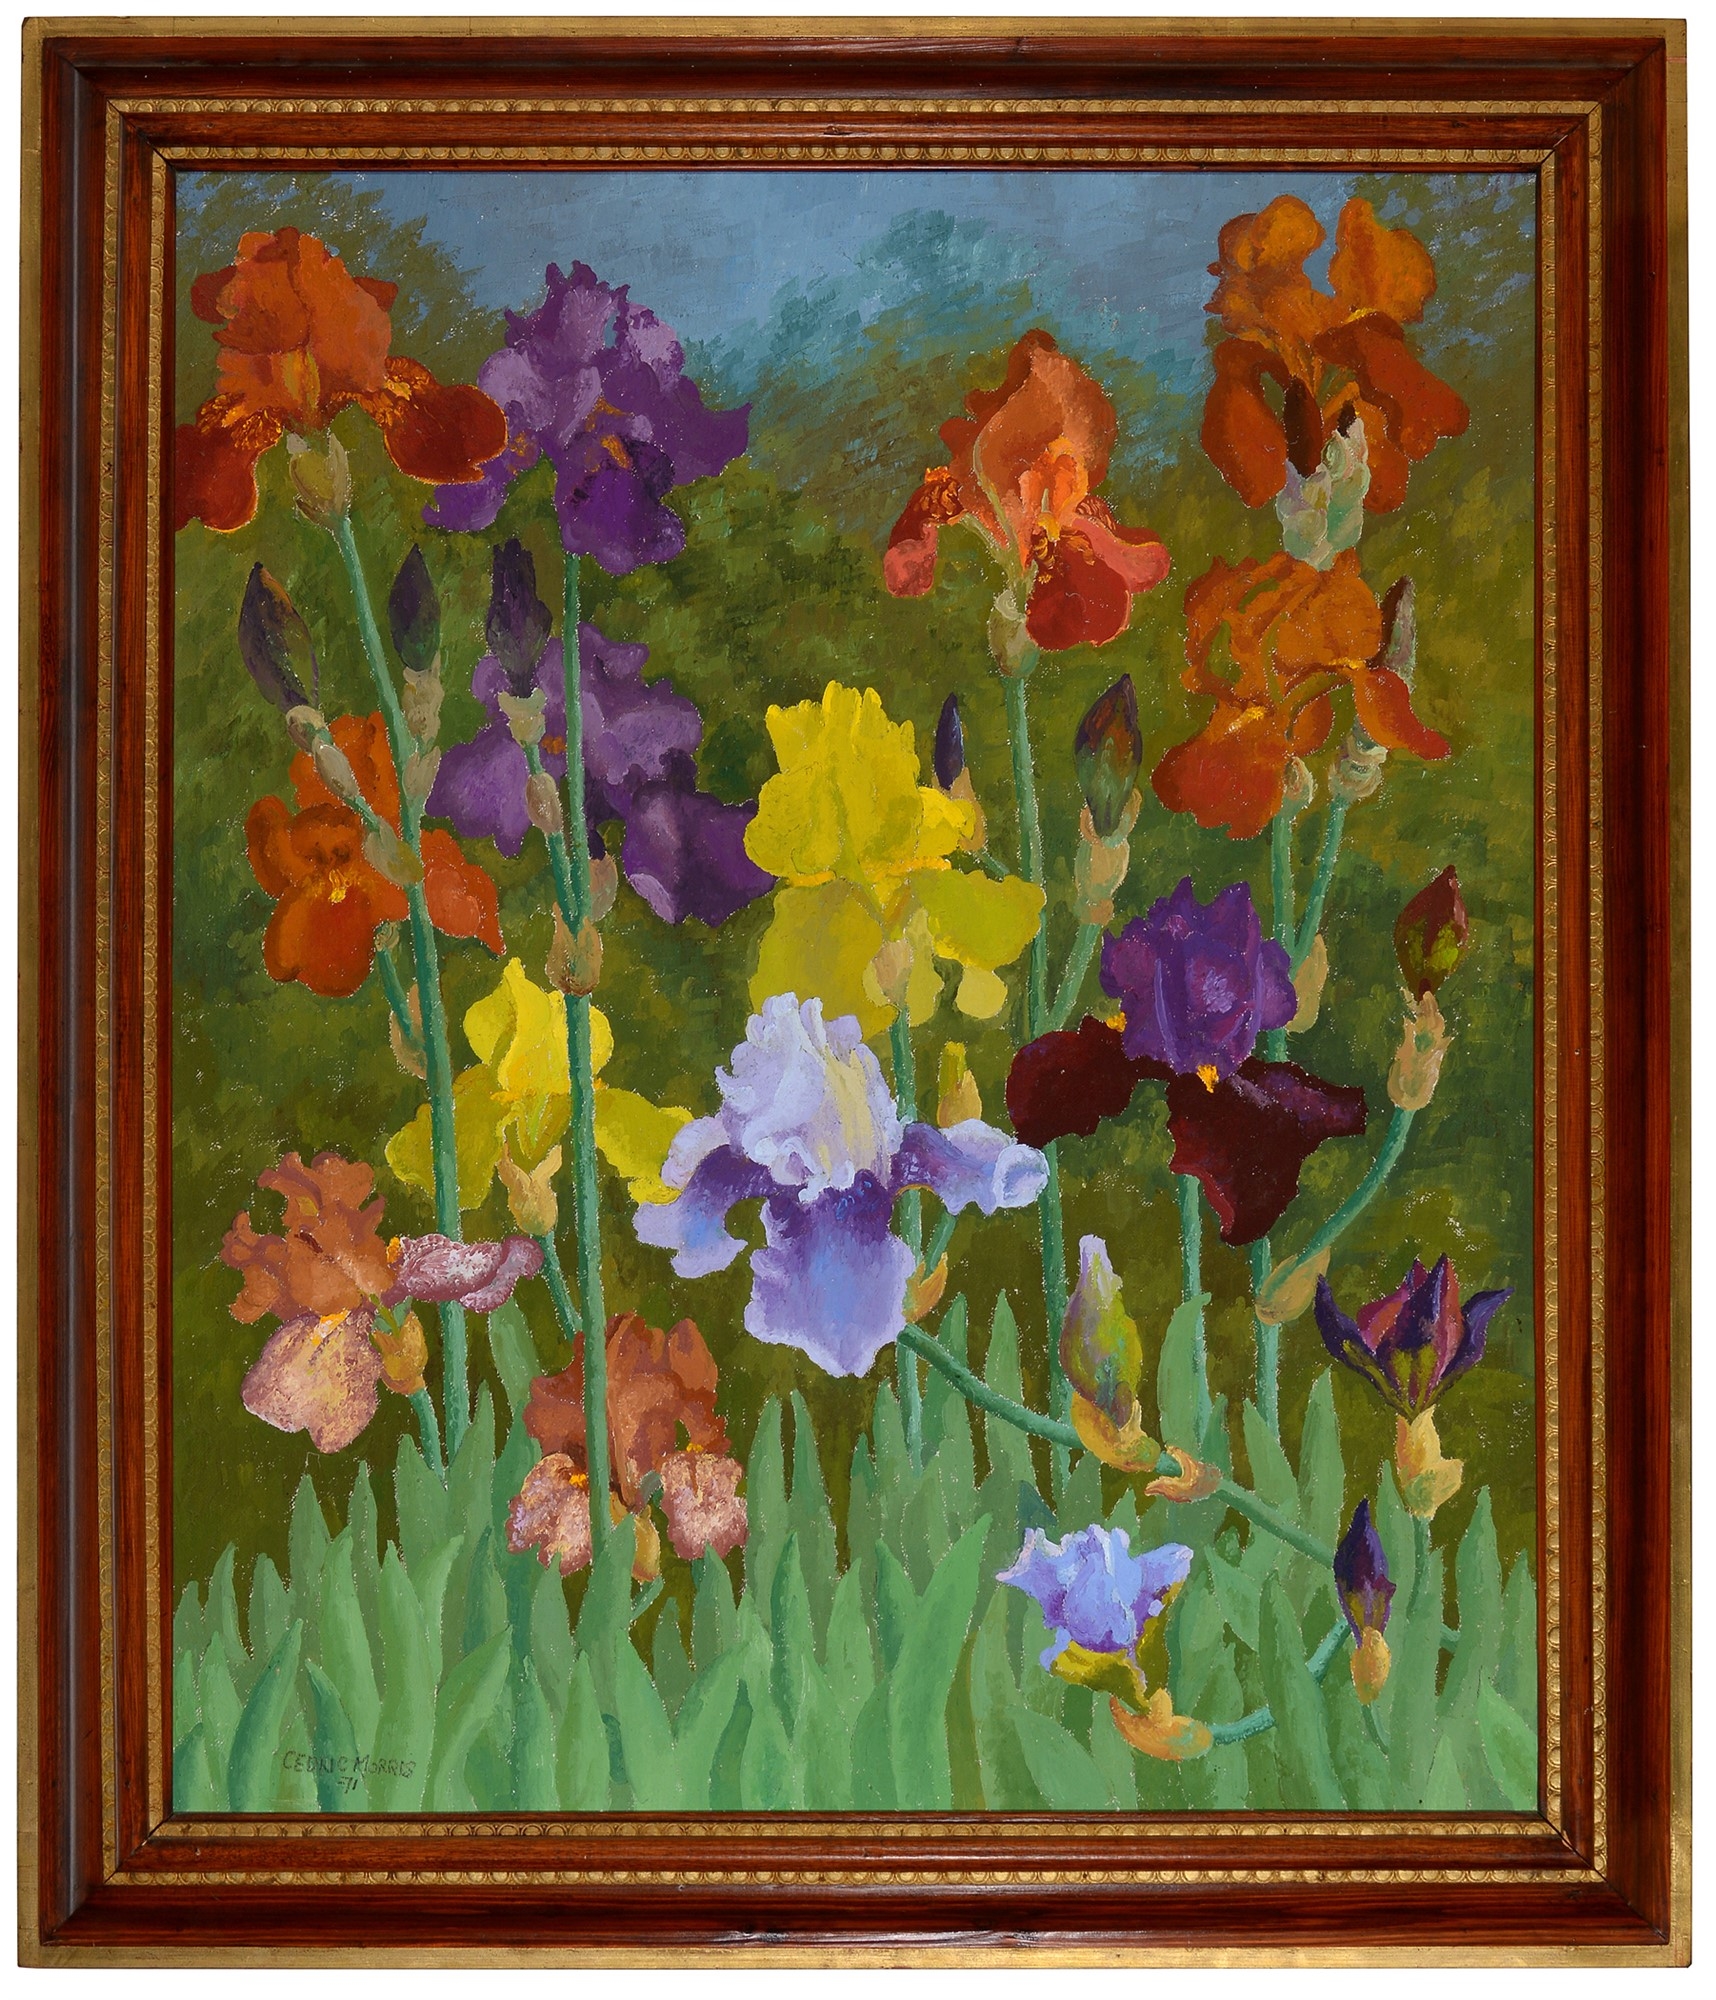 Irises by Sir Cedric Morris, 1971